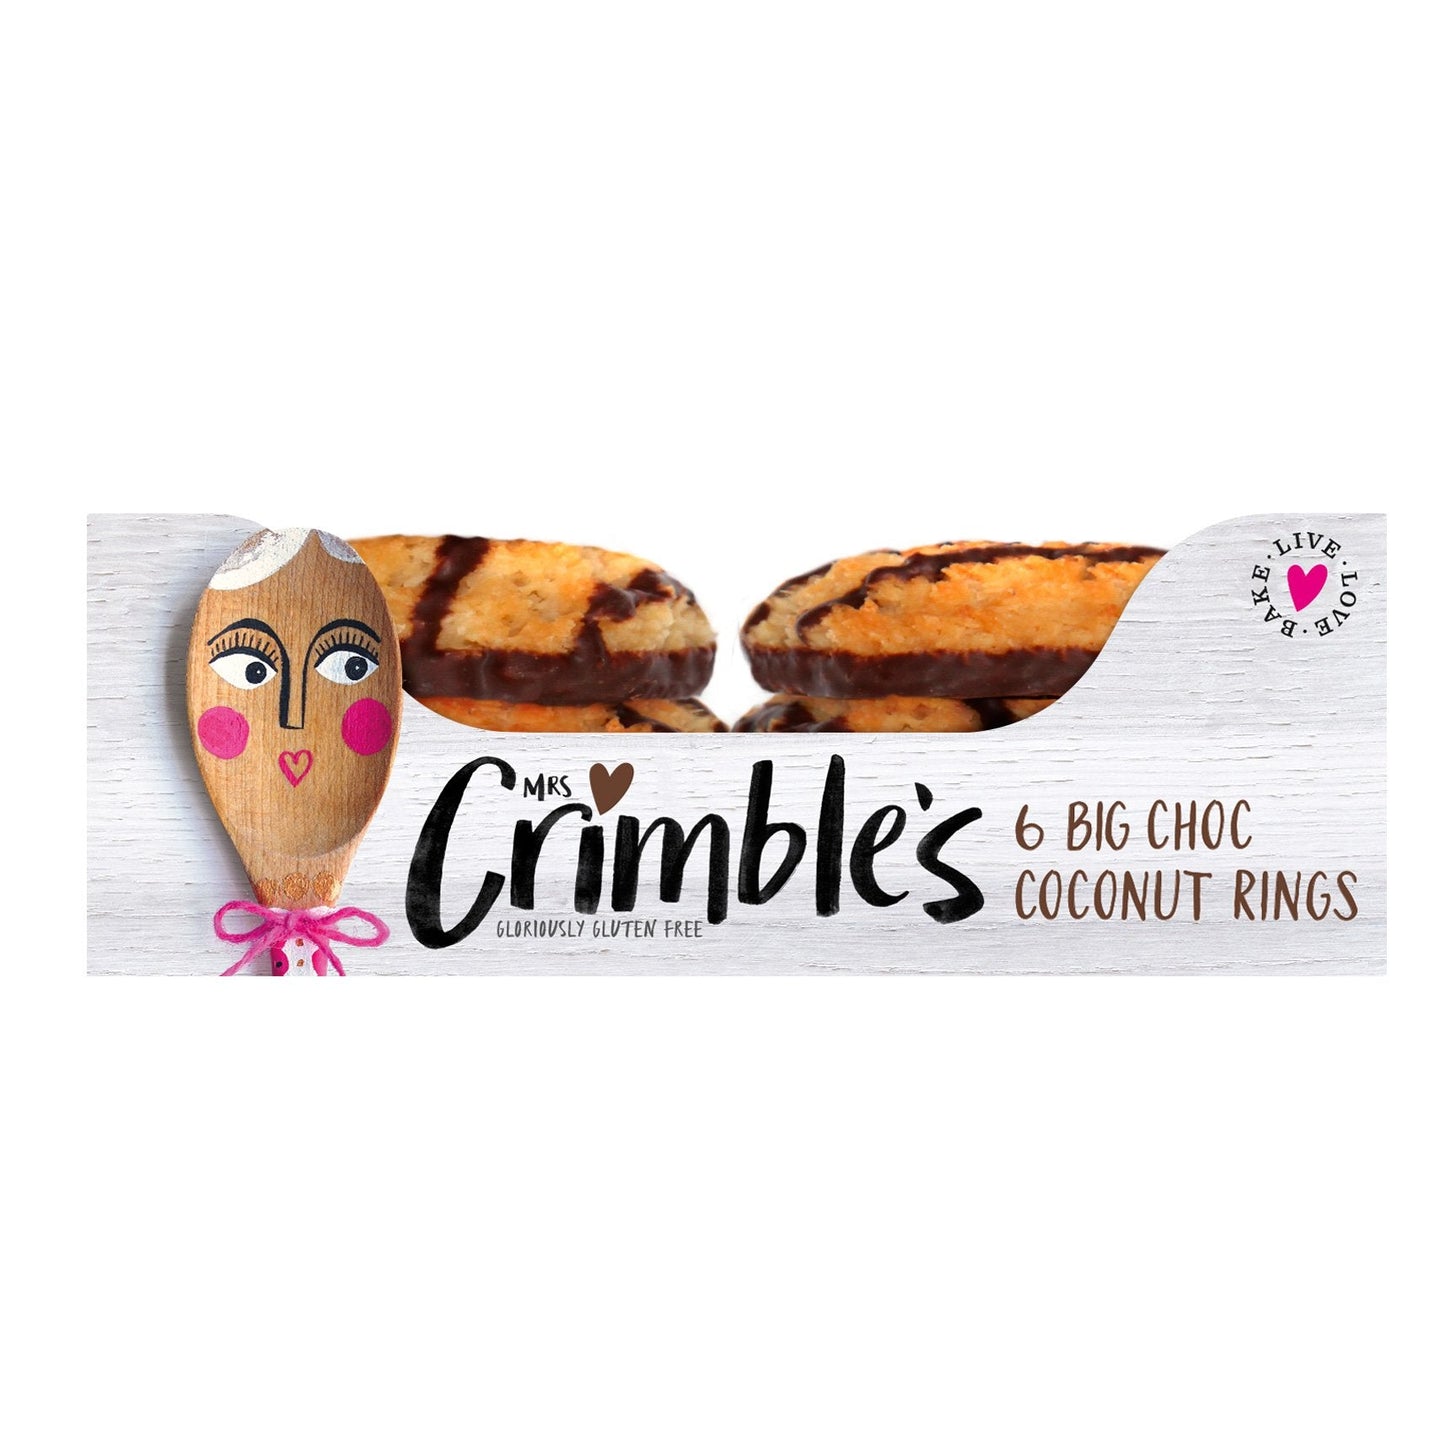 Mrs Crimbles 6 BIG CHOC COCONUT RINGS - Just Natural